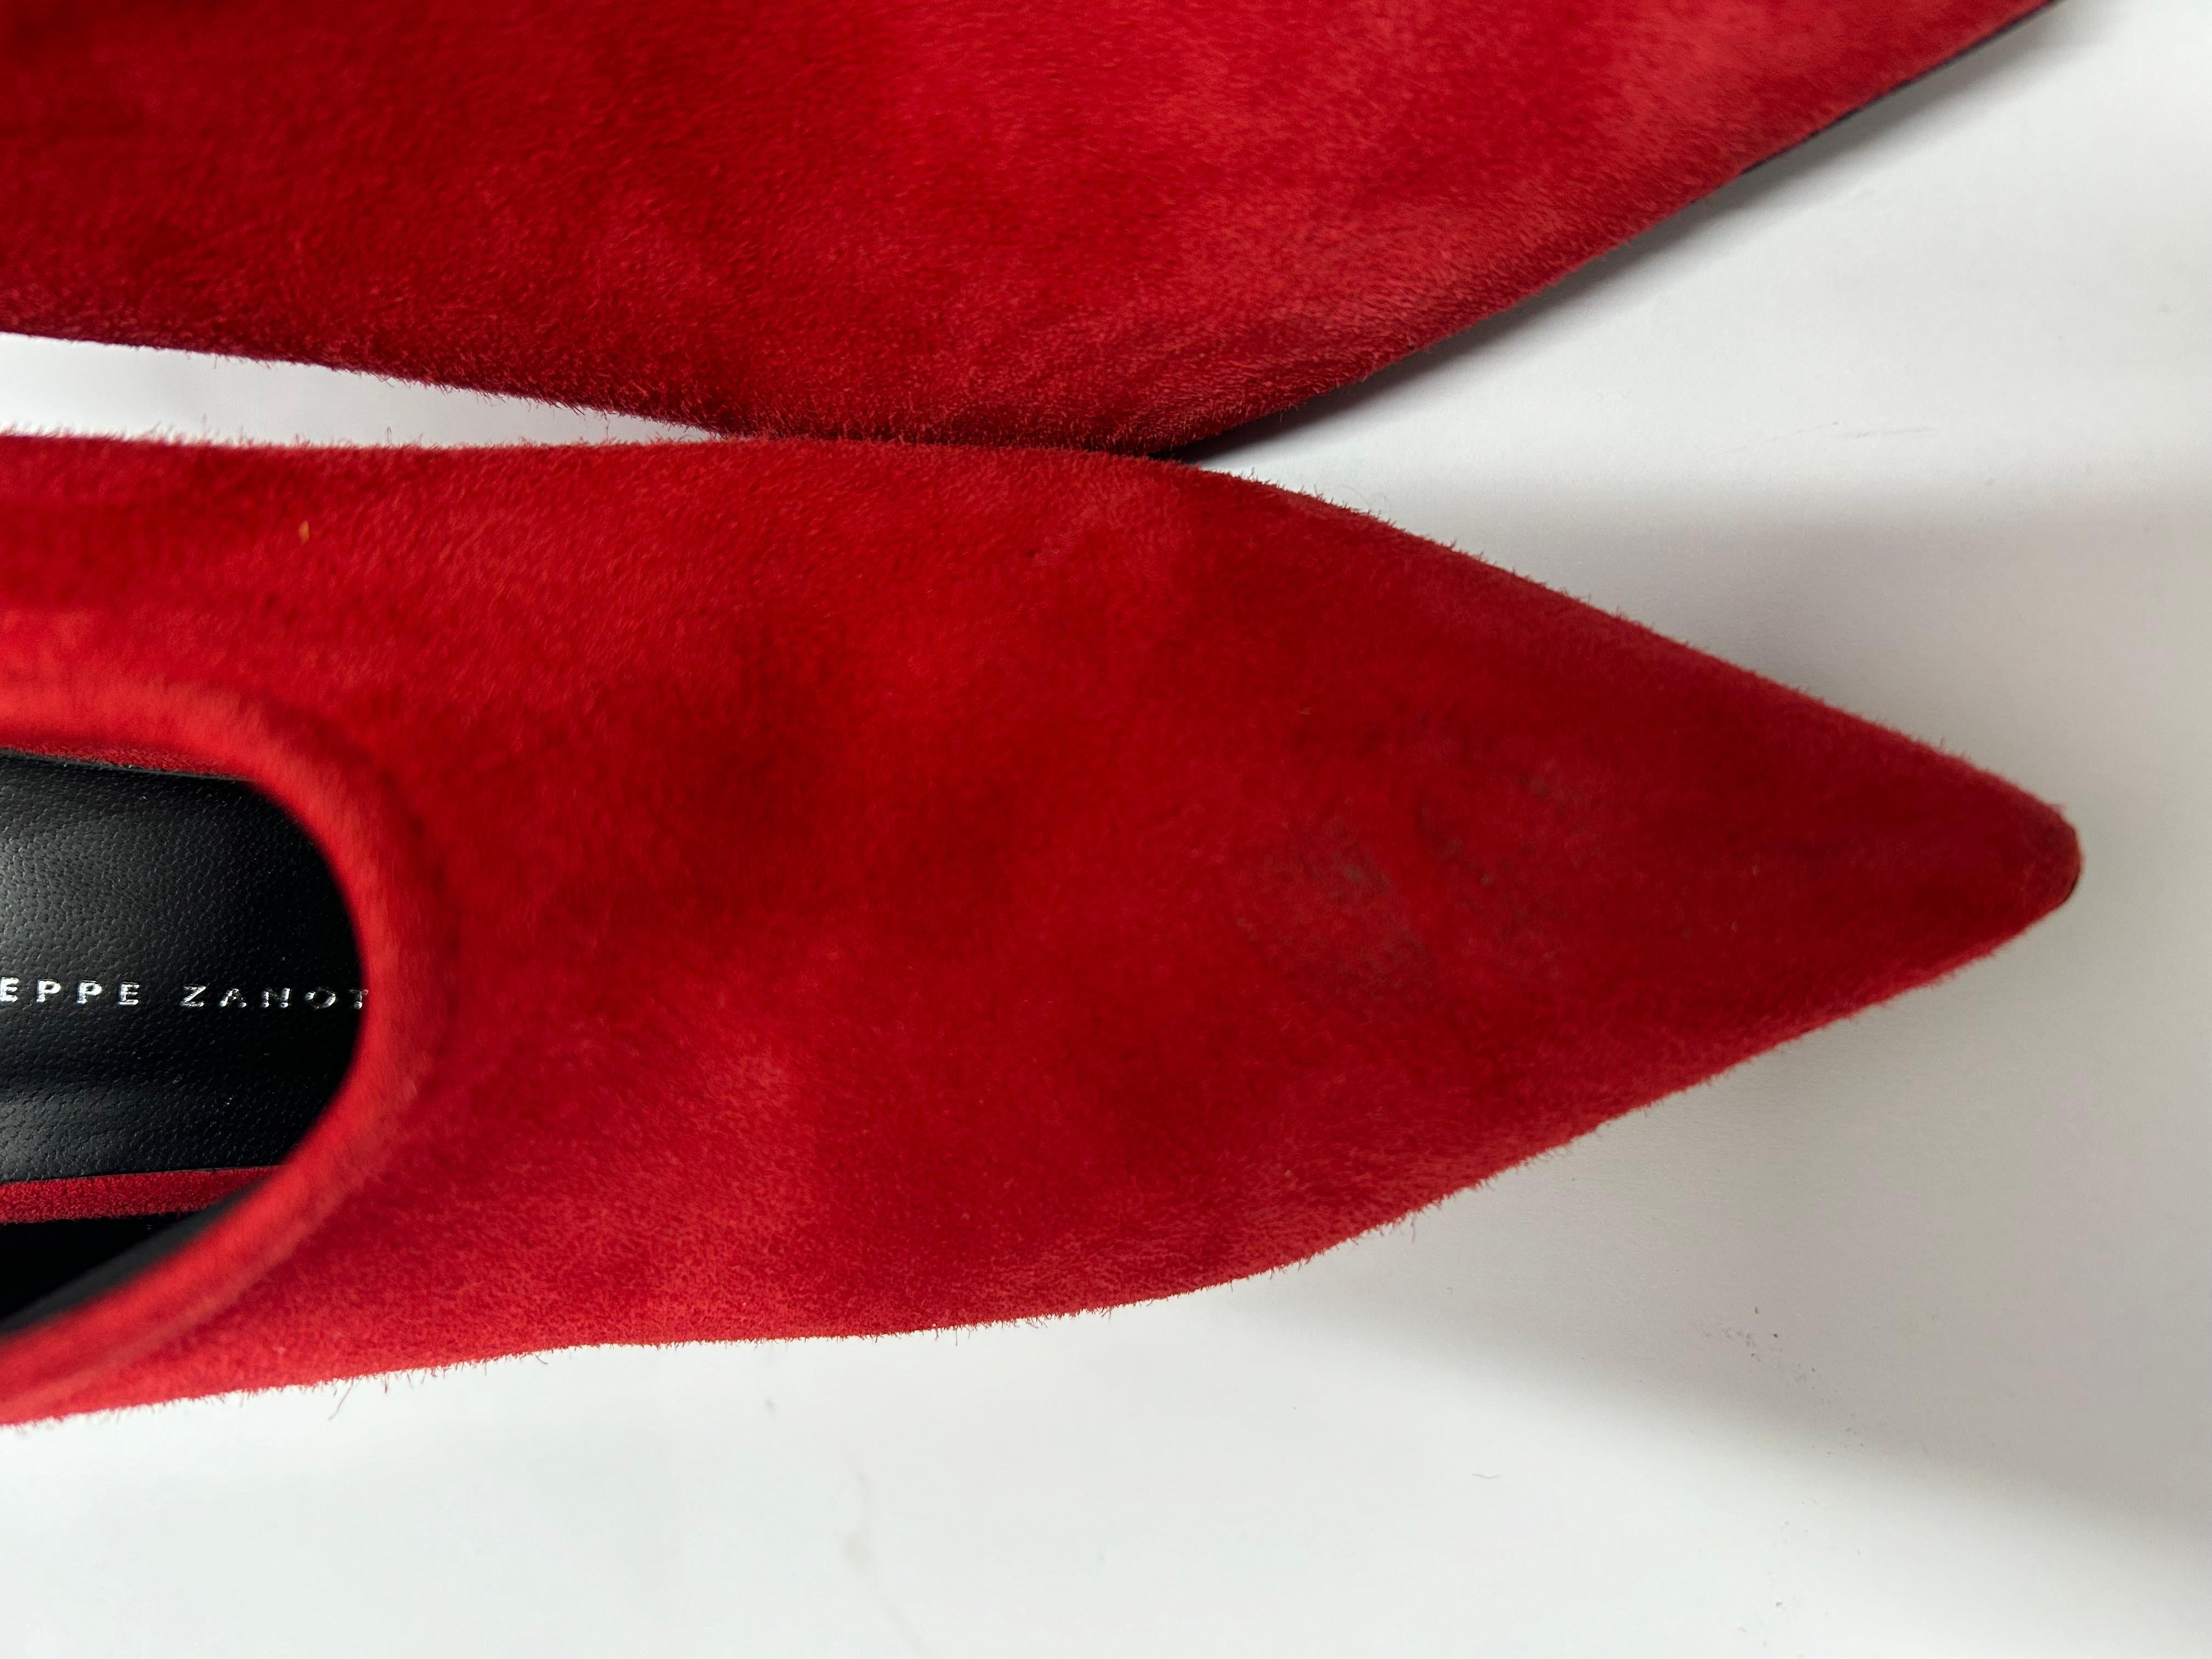 Giuseppe Zanotti Red Suede Bootie Size EU 39 For Sale 2